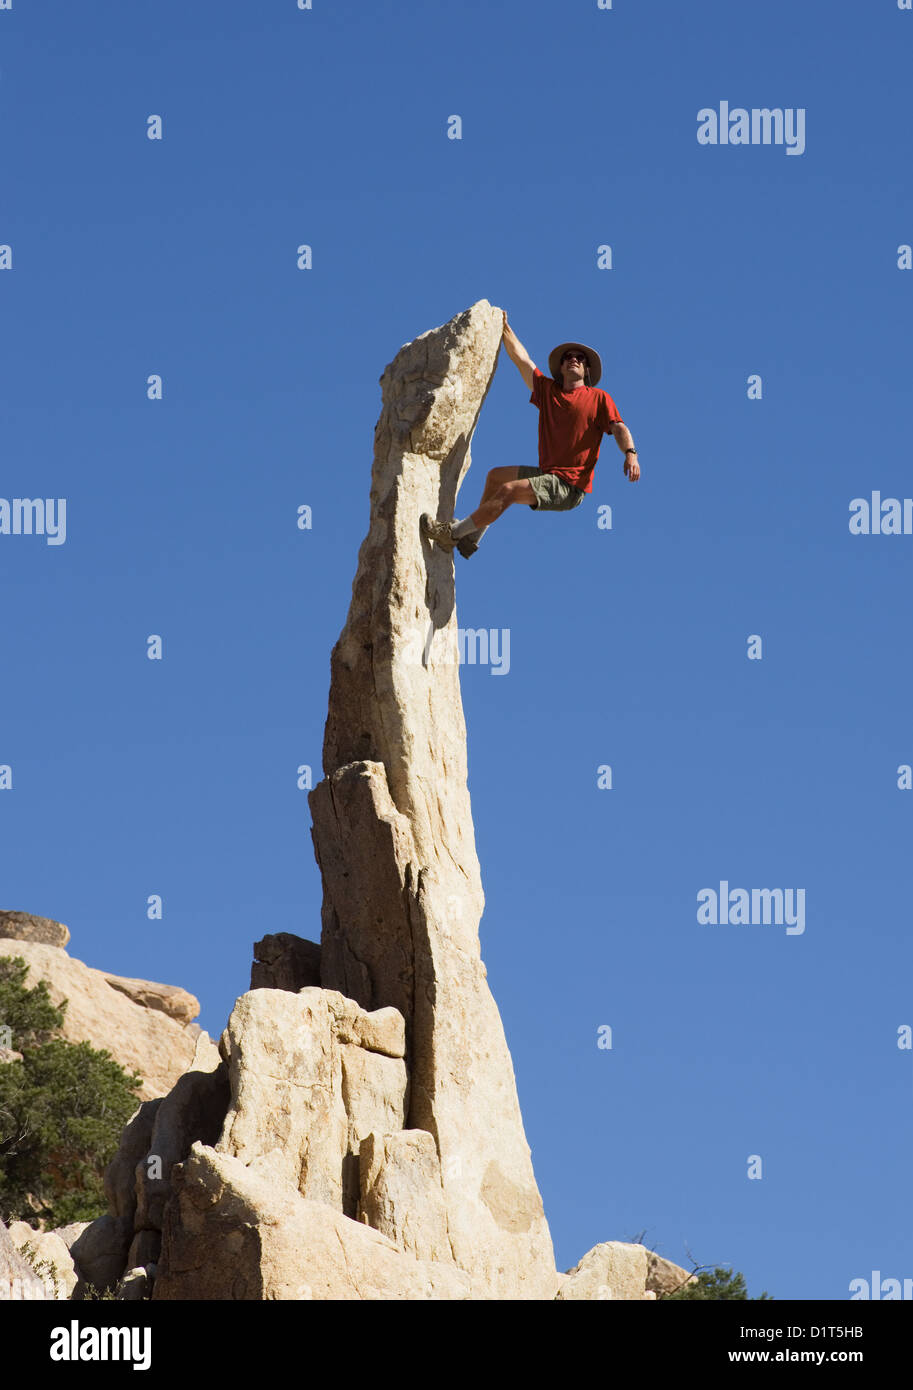 a man climbing up a steep narrow rock spire Stock Photo